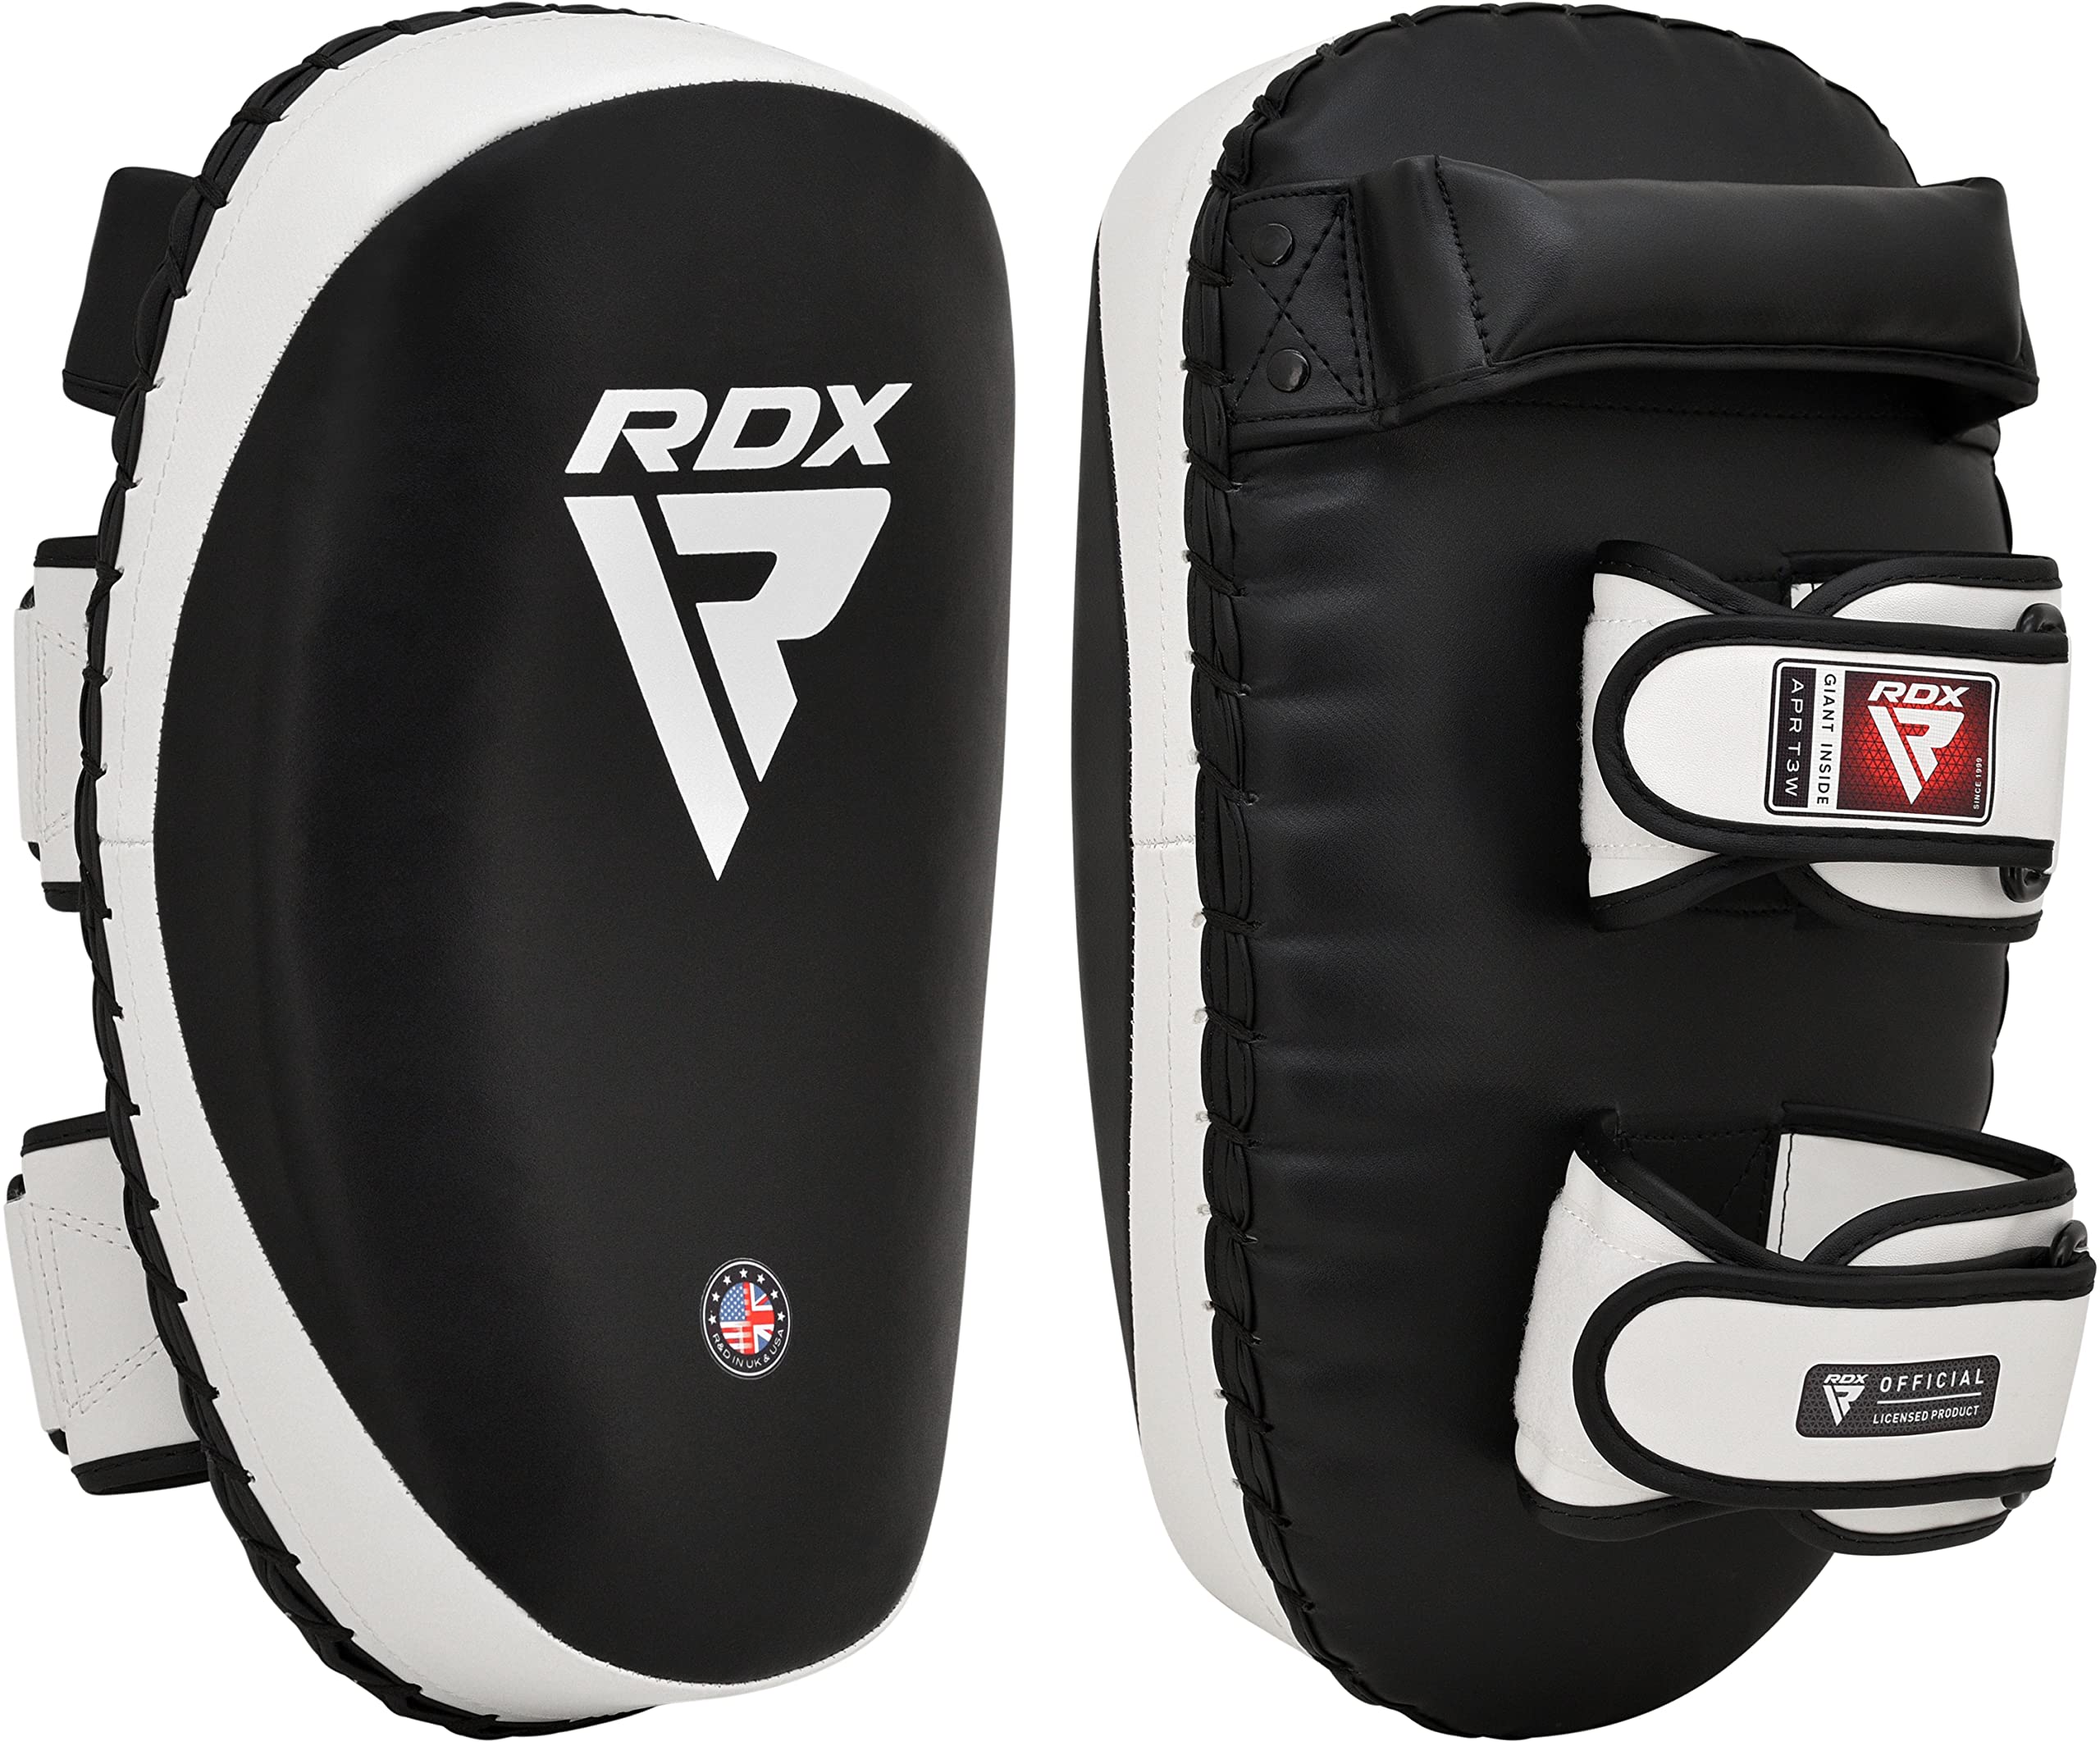 RDX T3 Orbit Schlagpolster Arm Pads, White/Black, One Size